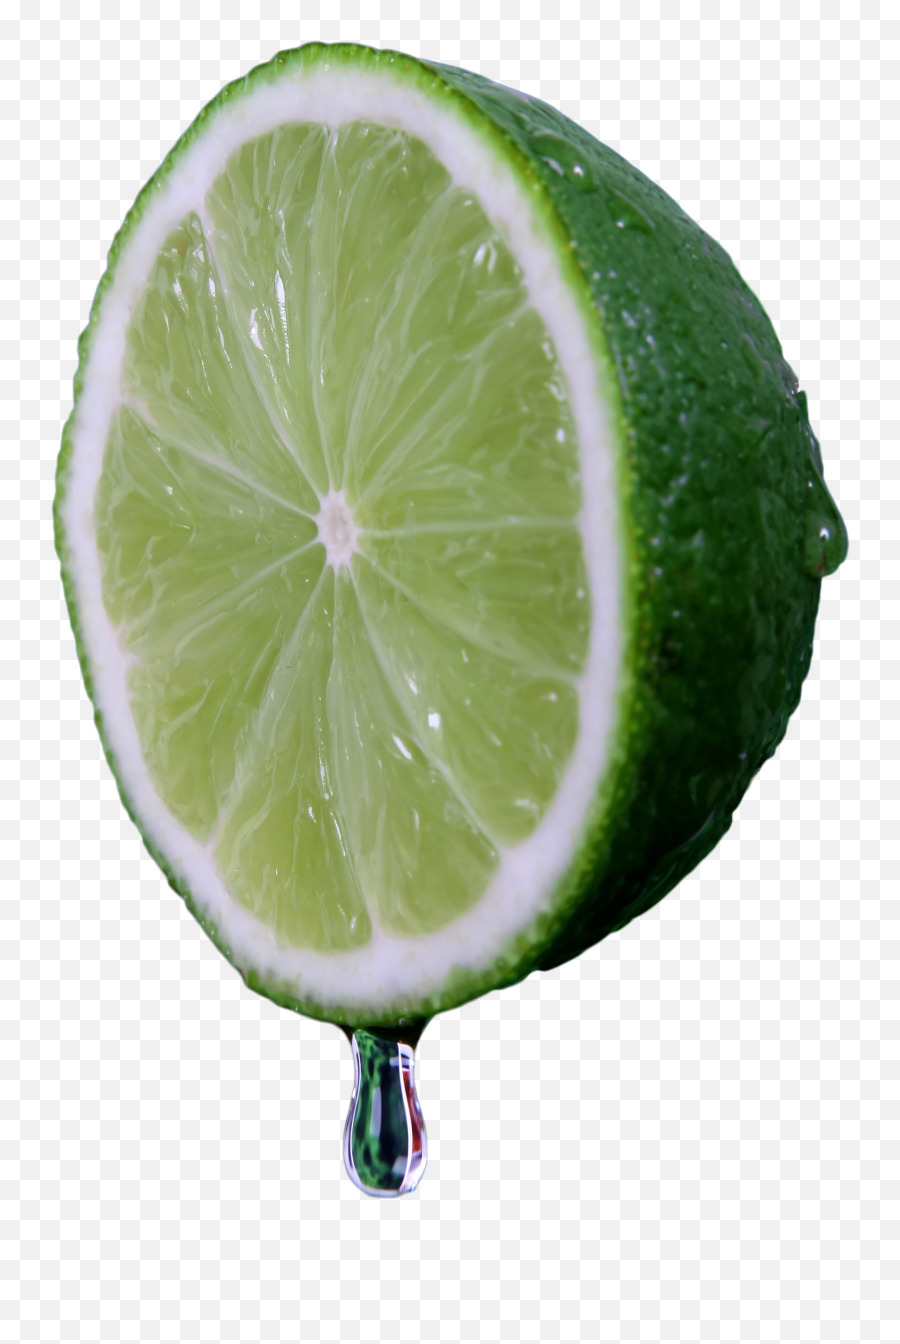 Download Lime Halved Png Image For Free - Water Droplet,Lime Transparent Background